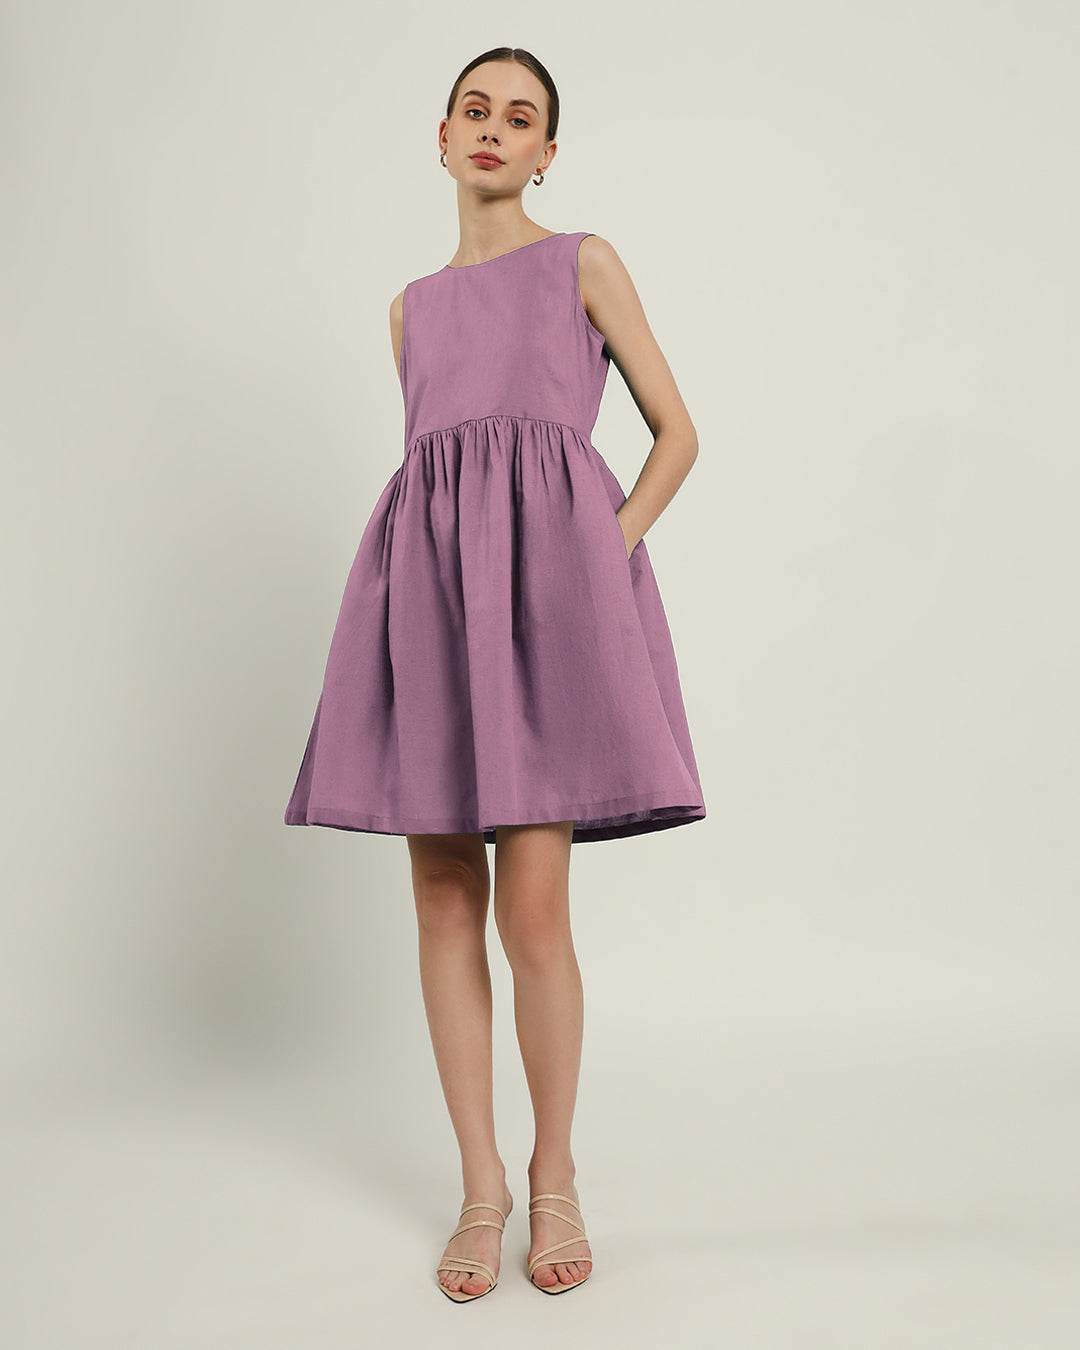 The Chania Purple Swirl Dress